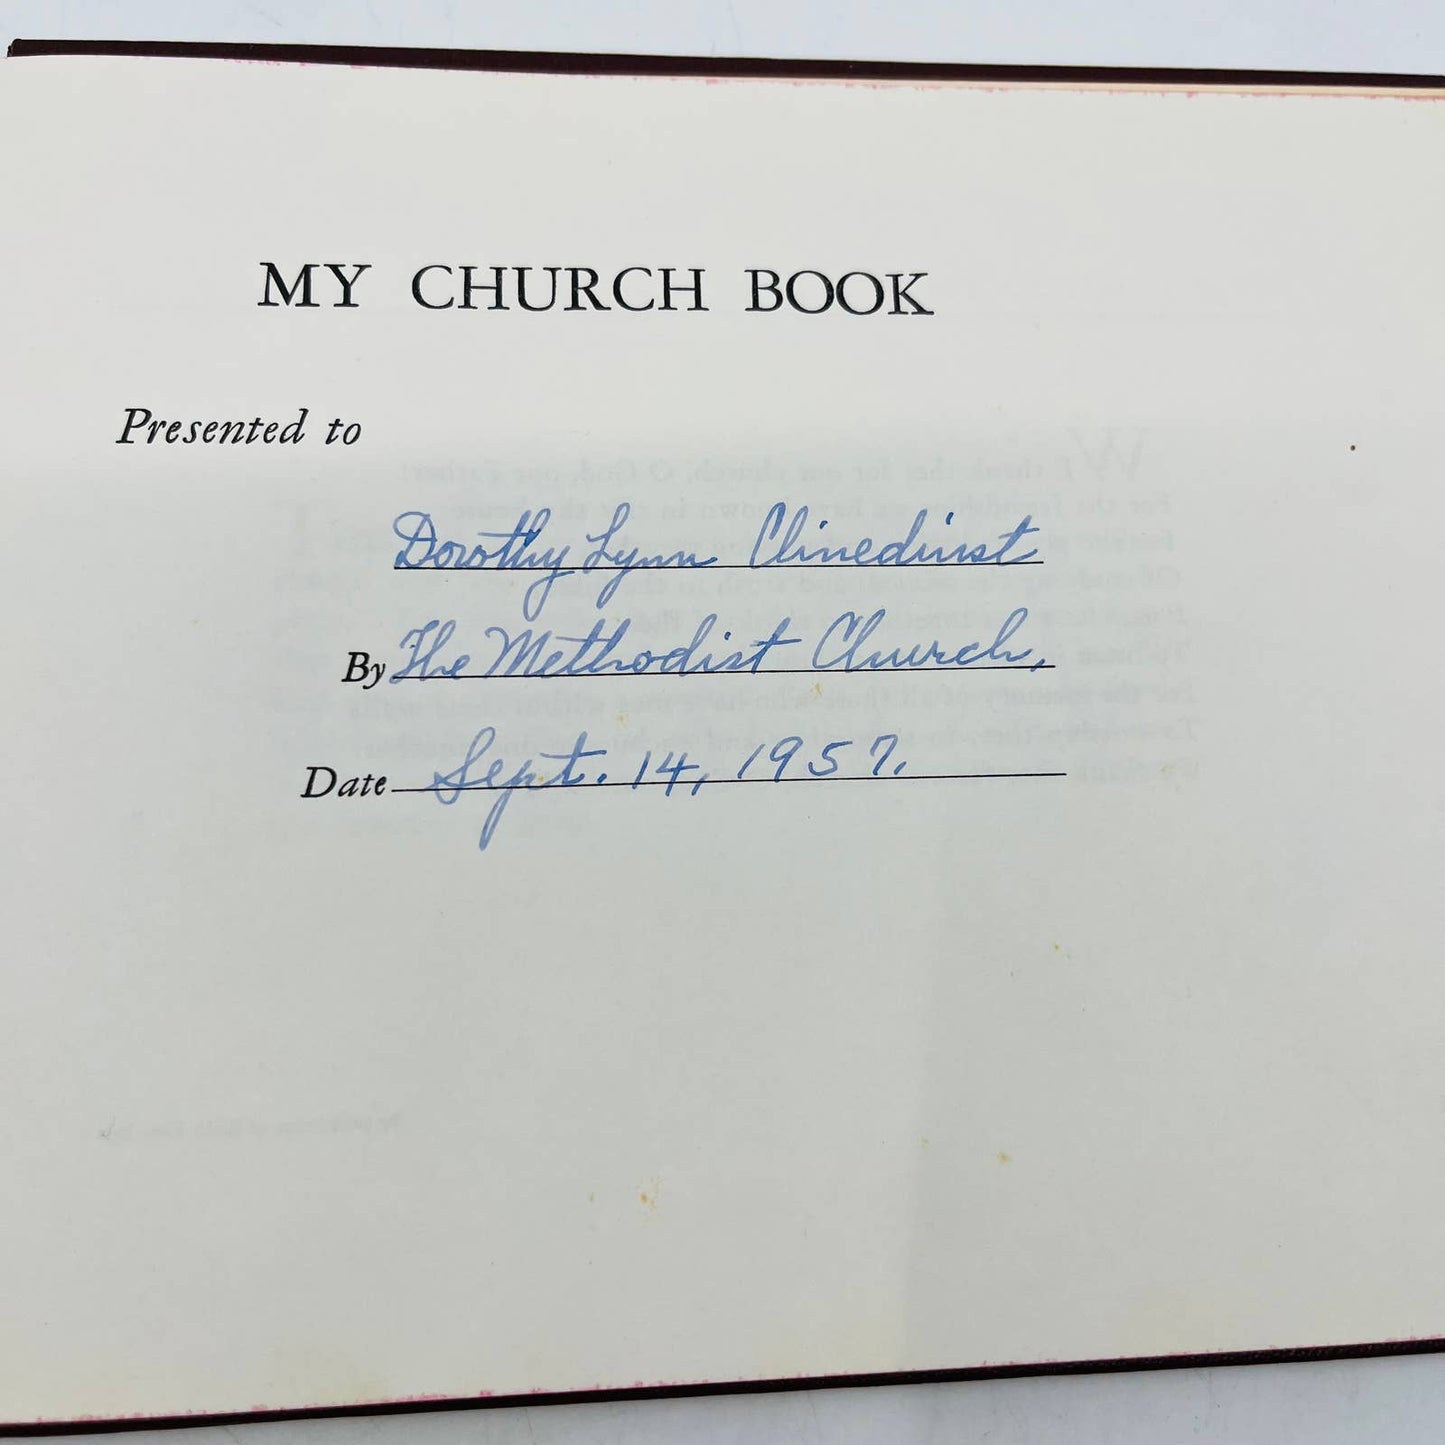 My Church Book Mary Skinner 1943 Abingdon Press Hardcover Dust BA4